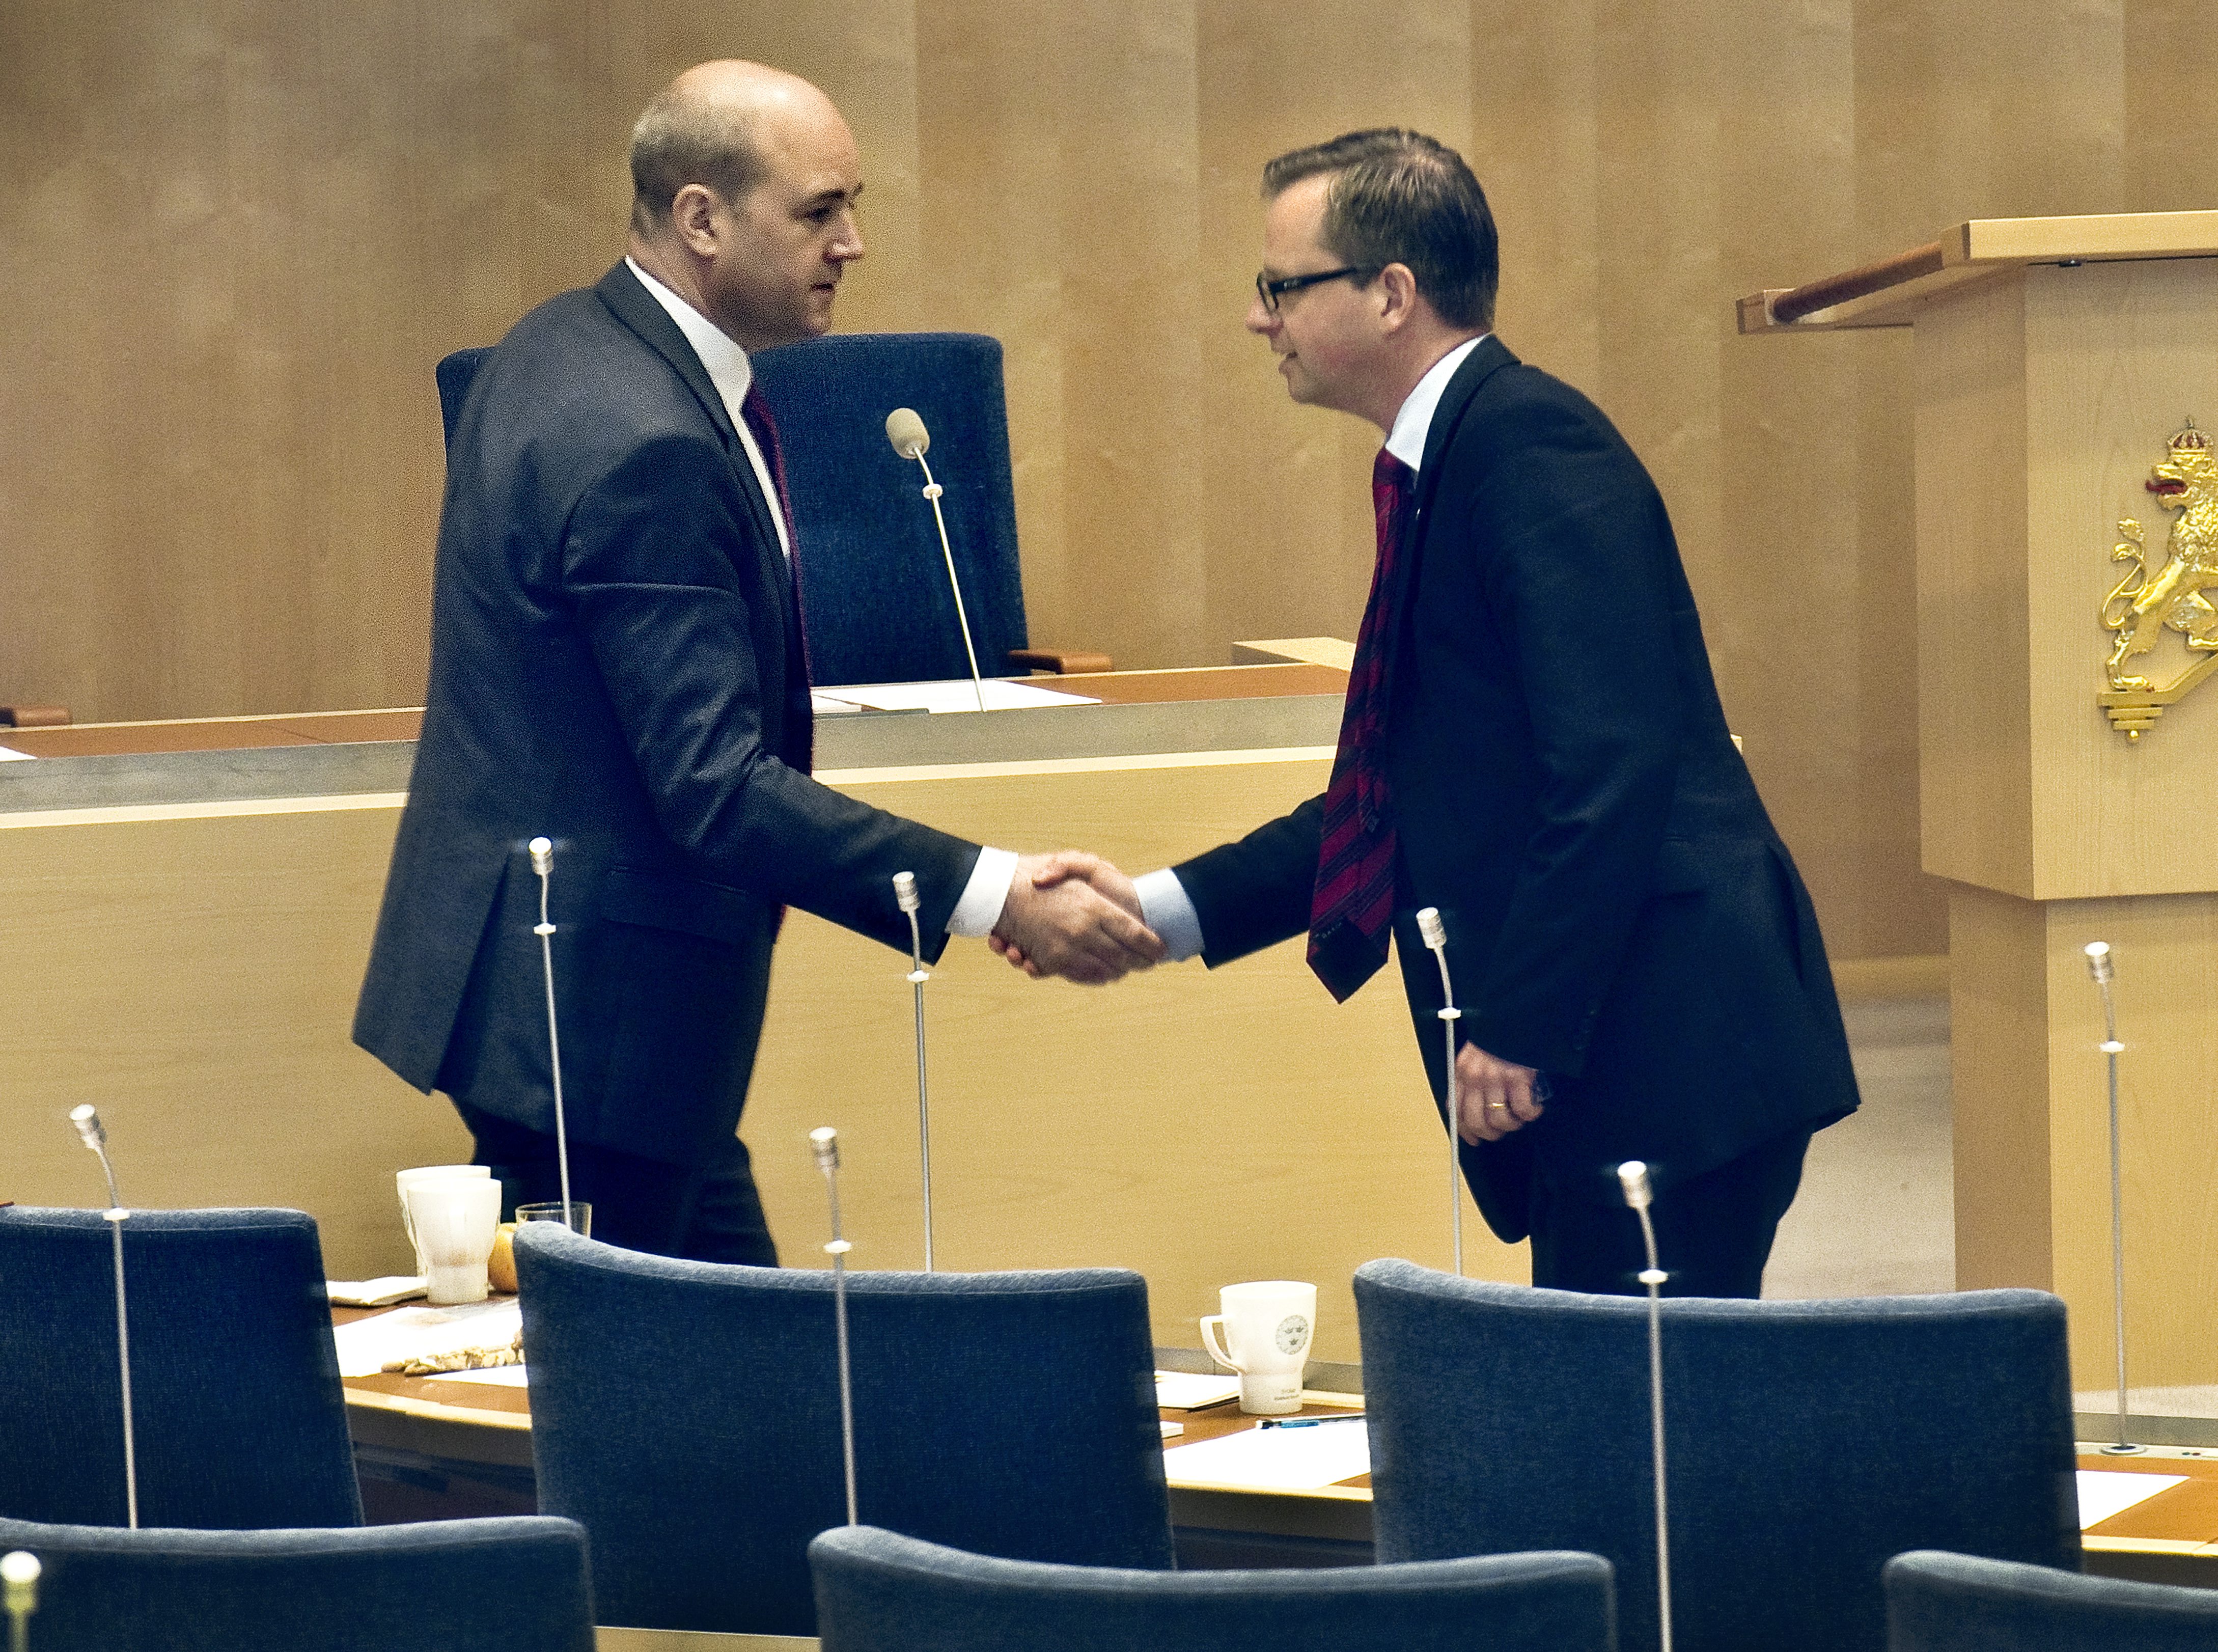 Debatt, Politik, Fredrik Reinfeldt, Partiledare, Socialdemokraterna, Sverigedemokraterna, Alliansen